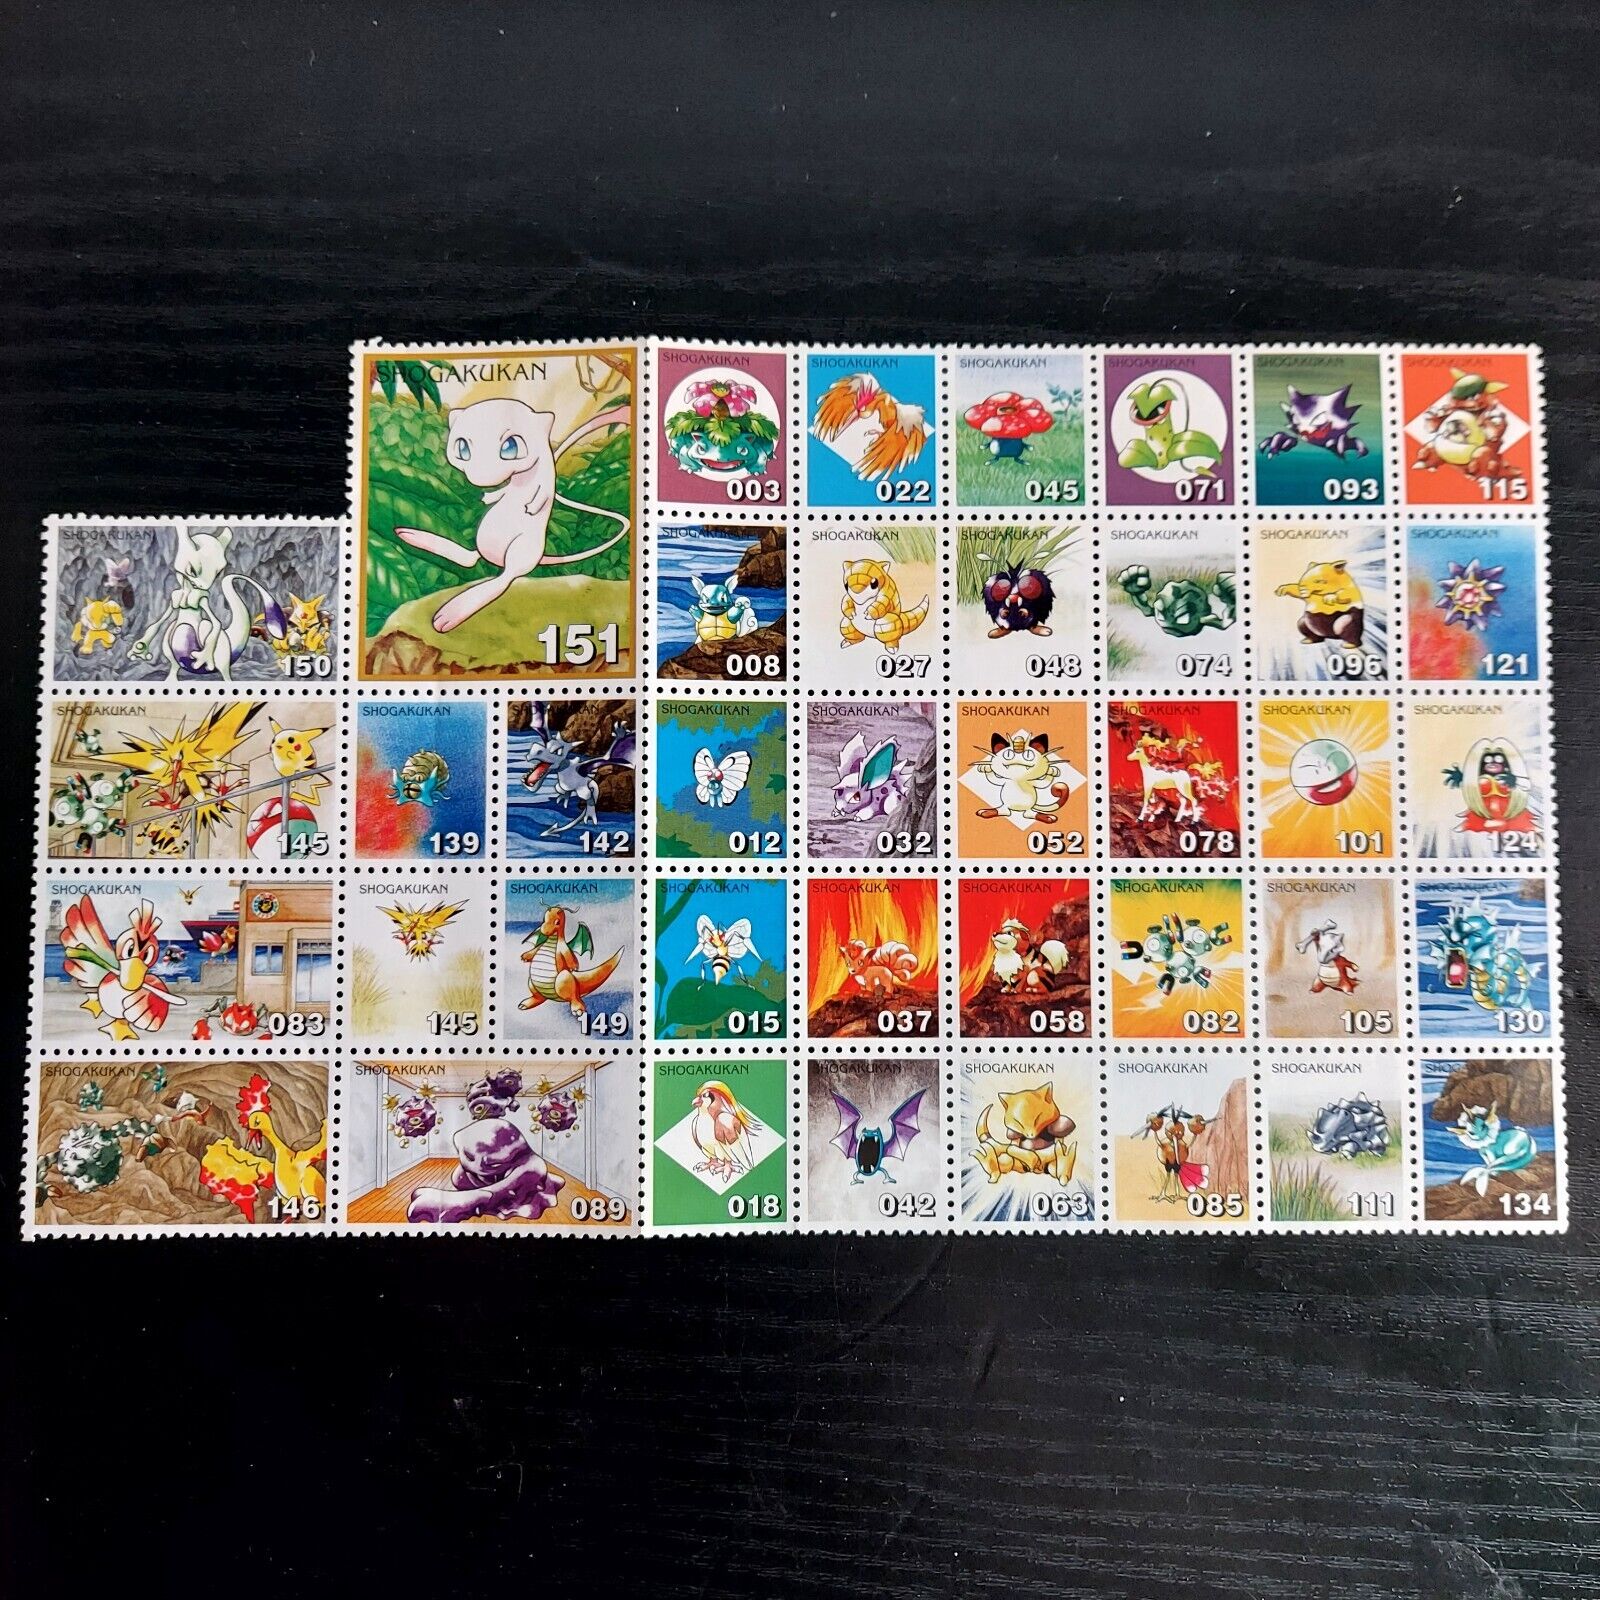 1998 Amazing Pokemon Shogakukan Stamps uncut sheet promo collection mew mewtwo